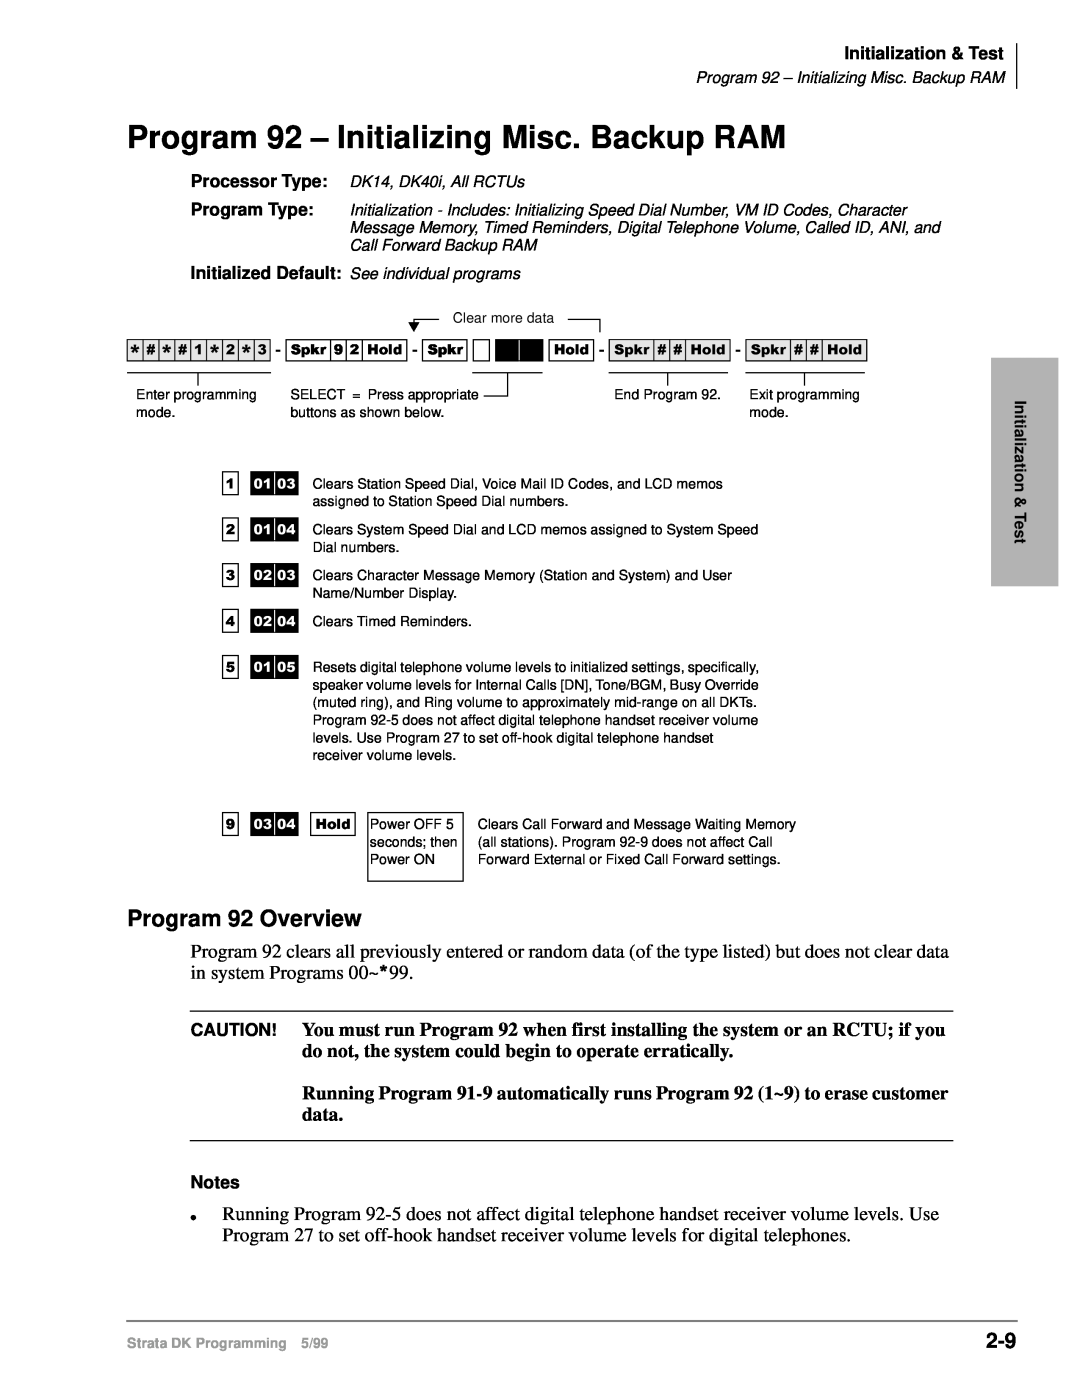 Toshiba dk14 manual Program 92 – Initializing Misc. Backup RAM, Program 92 Overview, Initialization & Test, Notes 